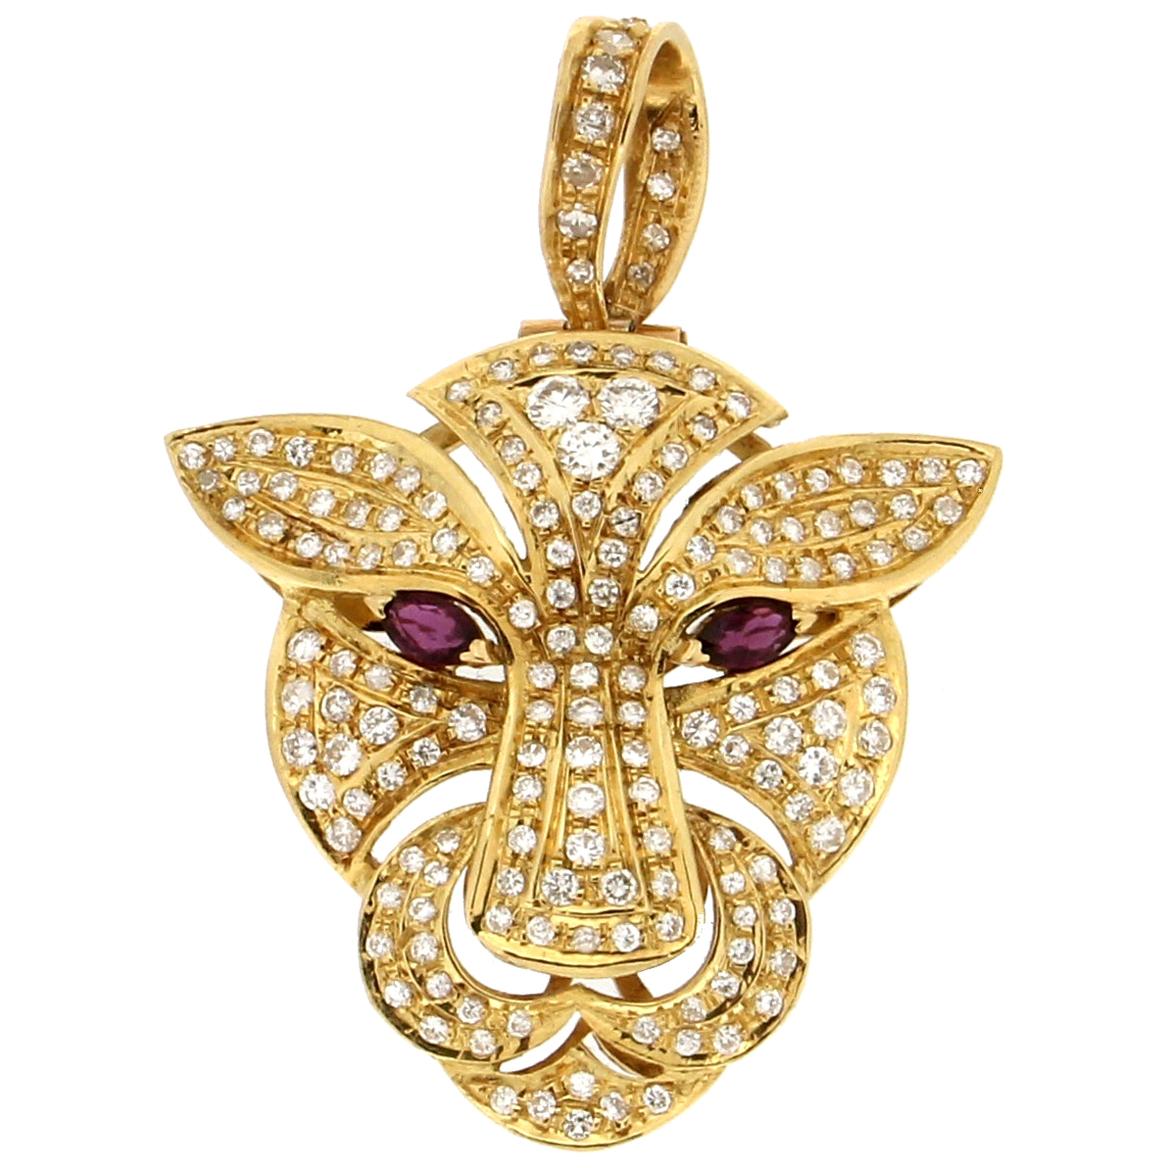 Handcraft Cougar 18 Karat Yellow Gold Diamonds Pendant Necklace For Sale